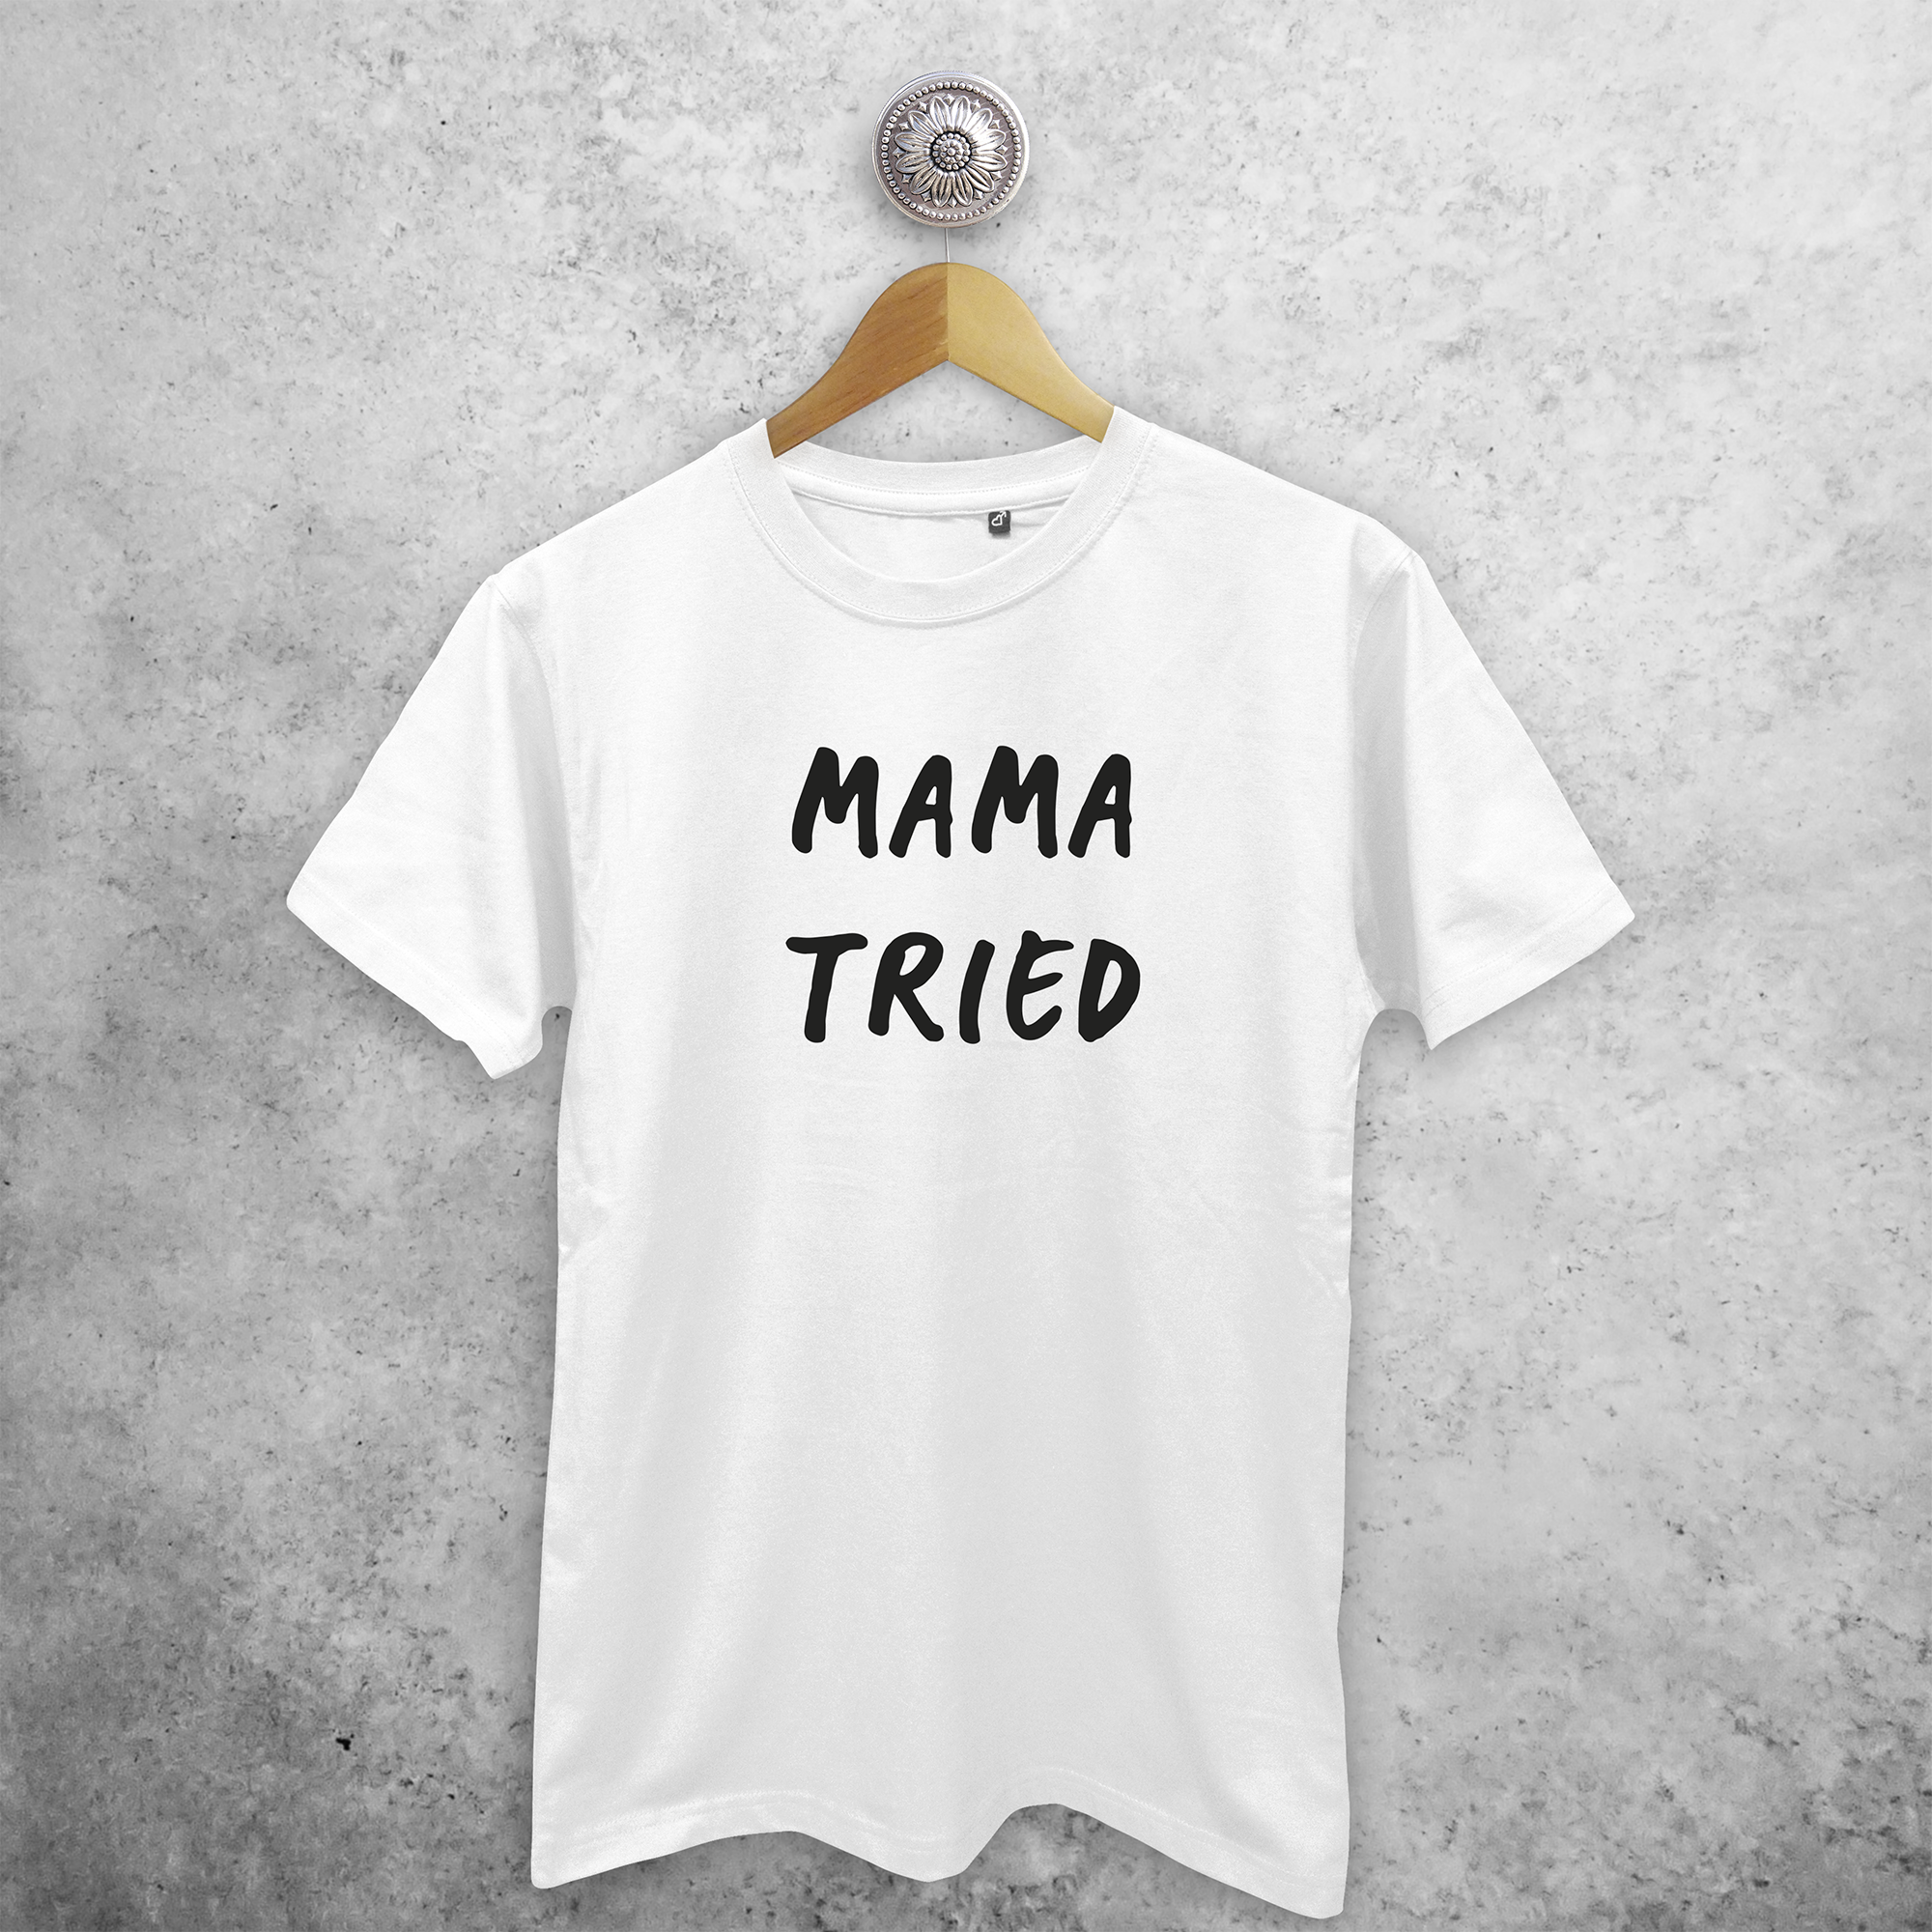 'Mama tried' volwassene shirt